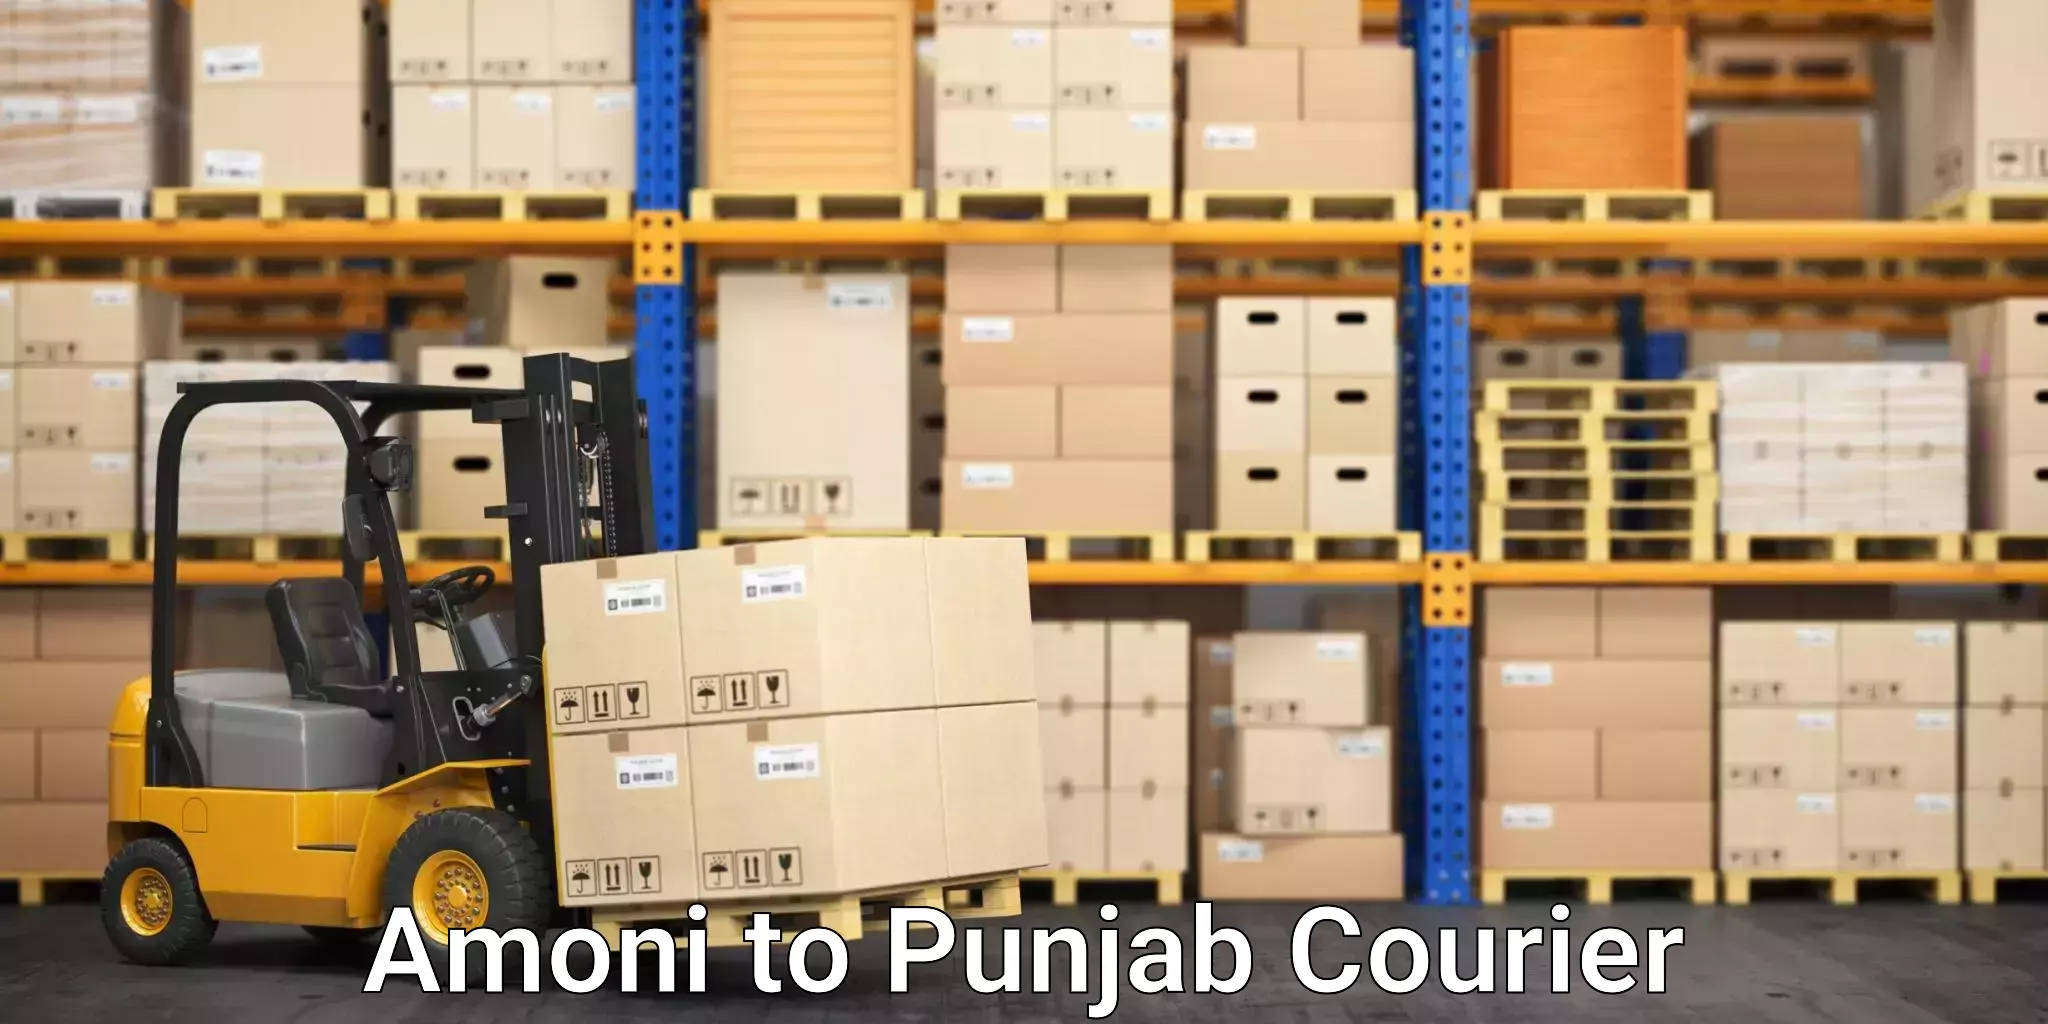 Efficient cargo handling Amoni to Punjab